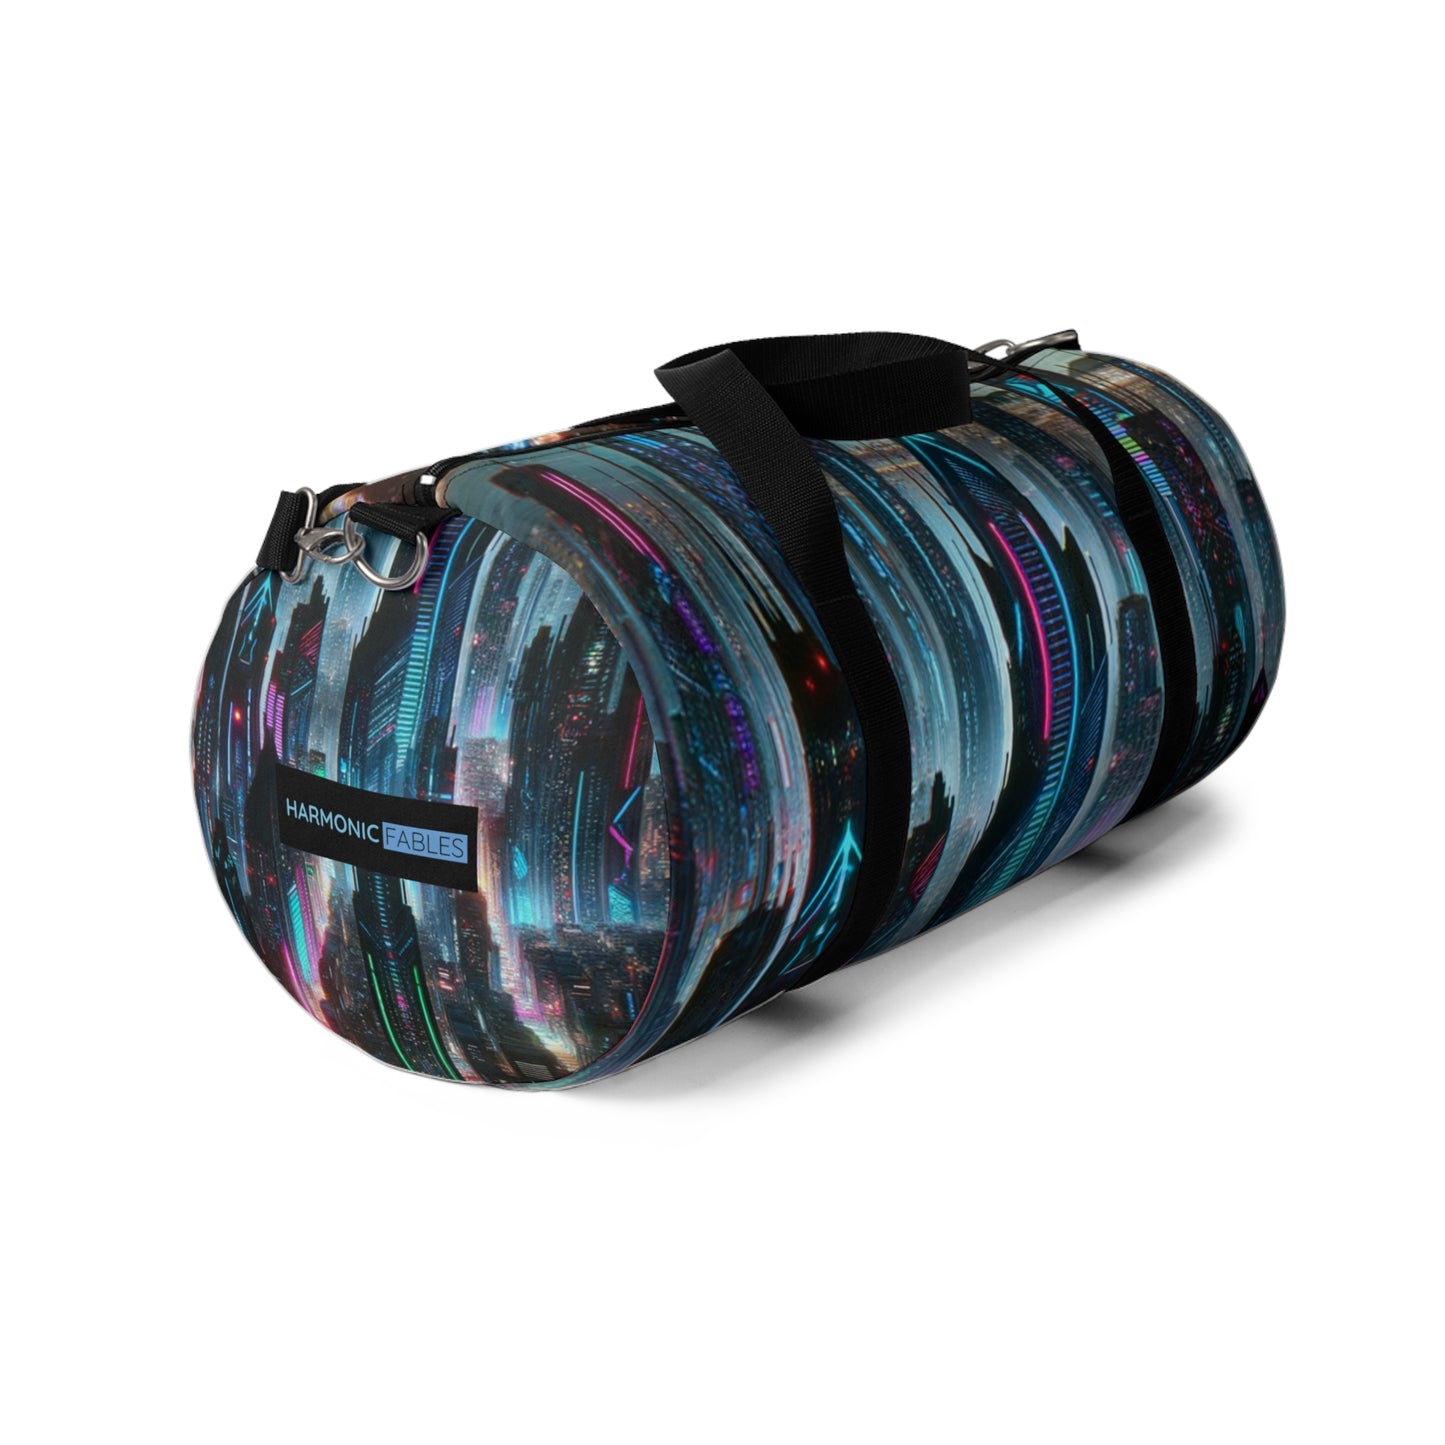 Edamora Luxury Bags - Duffel Bag